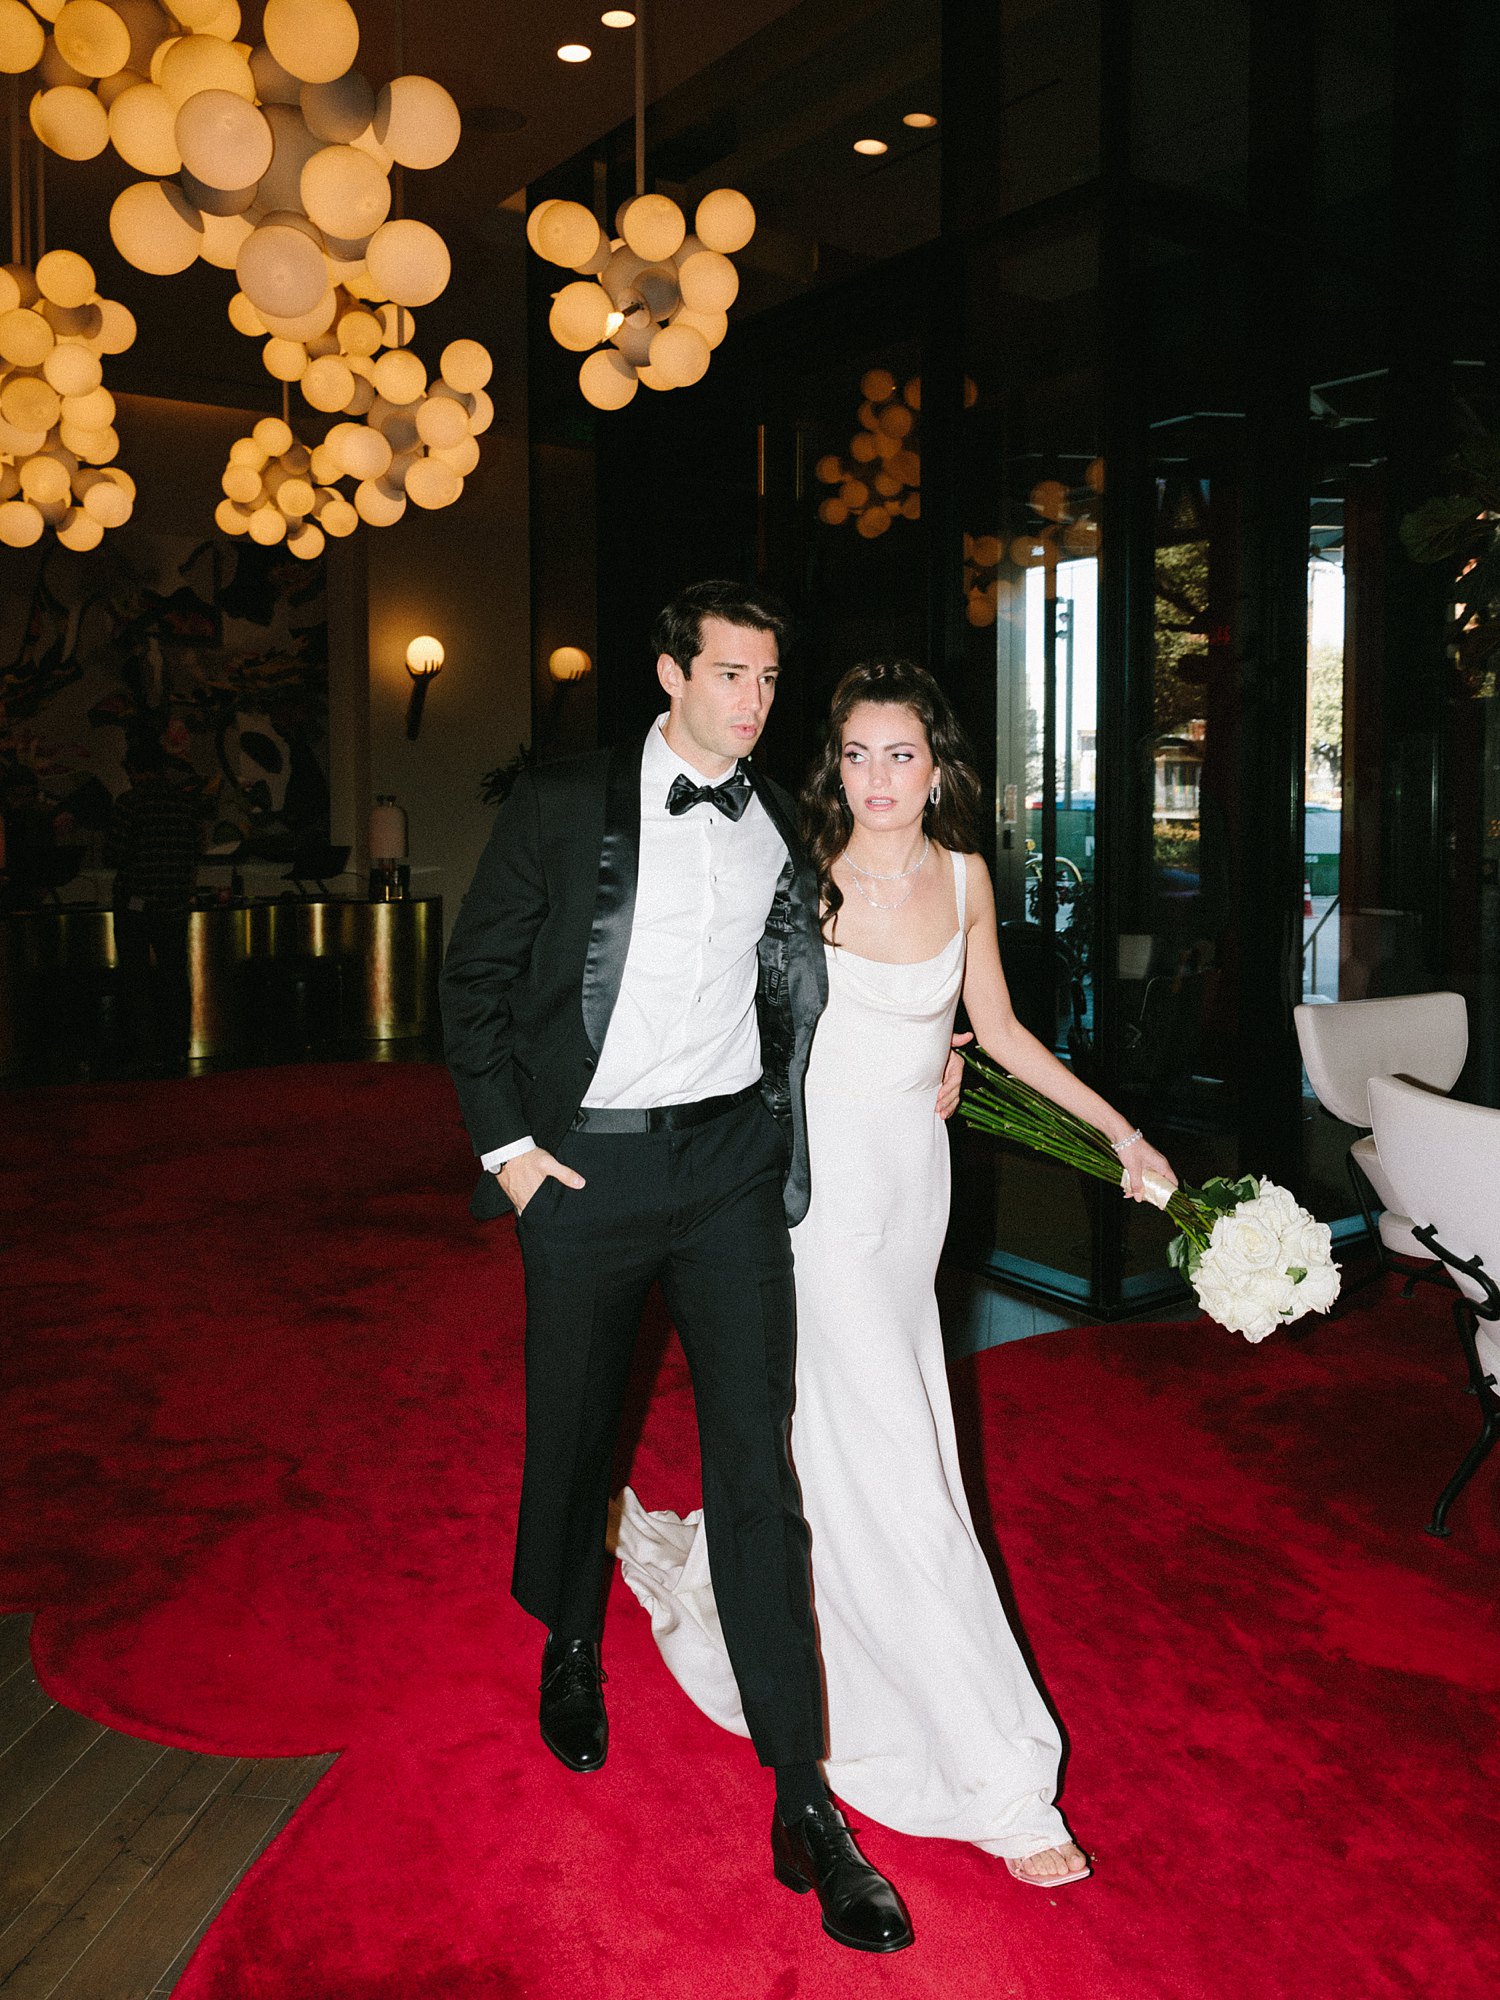 man in black tuxedo with woman in white dress walking in red carpet hotel lobby